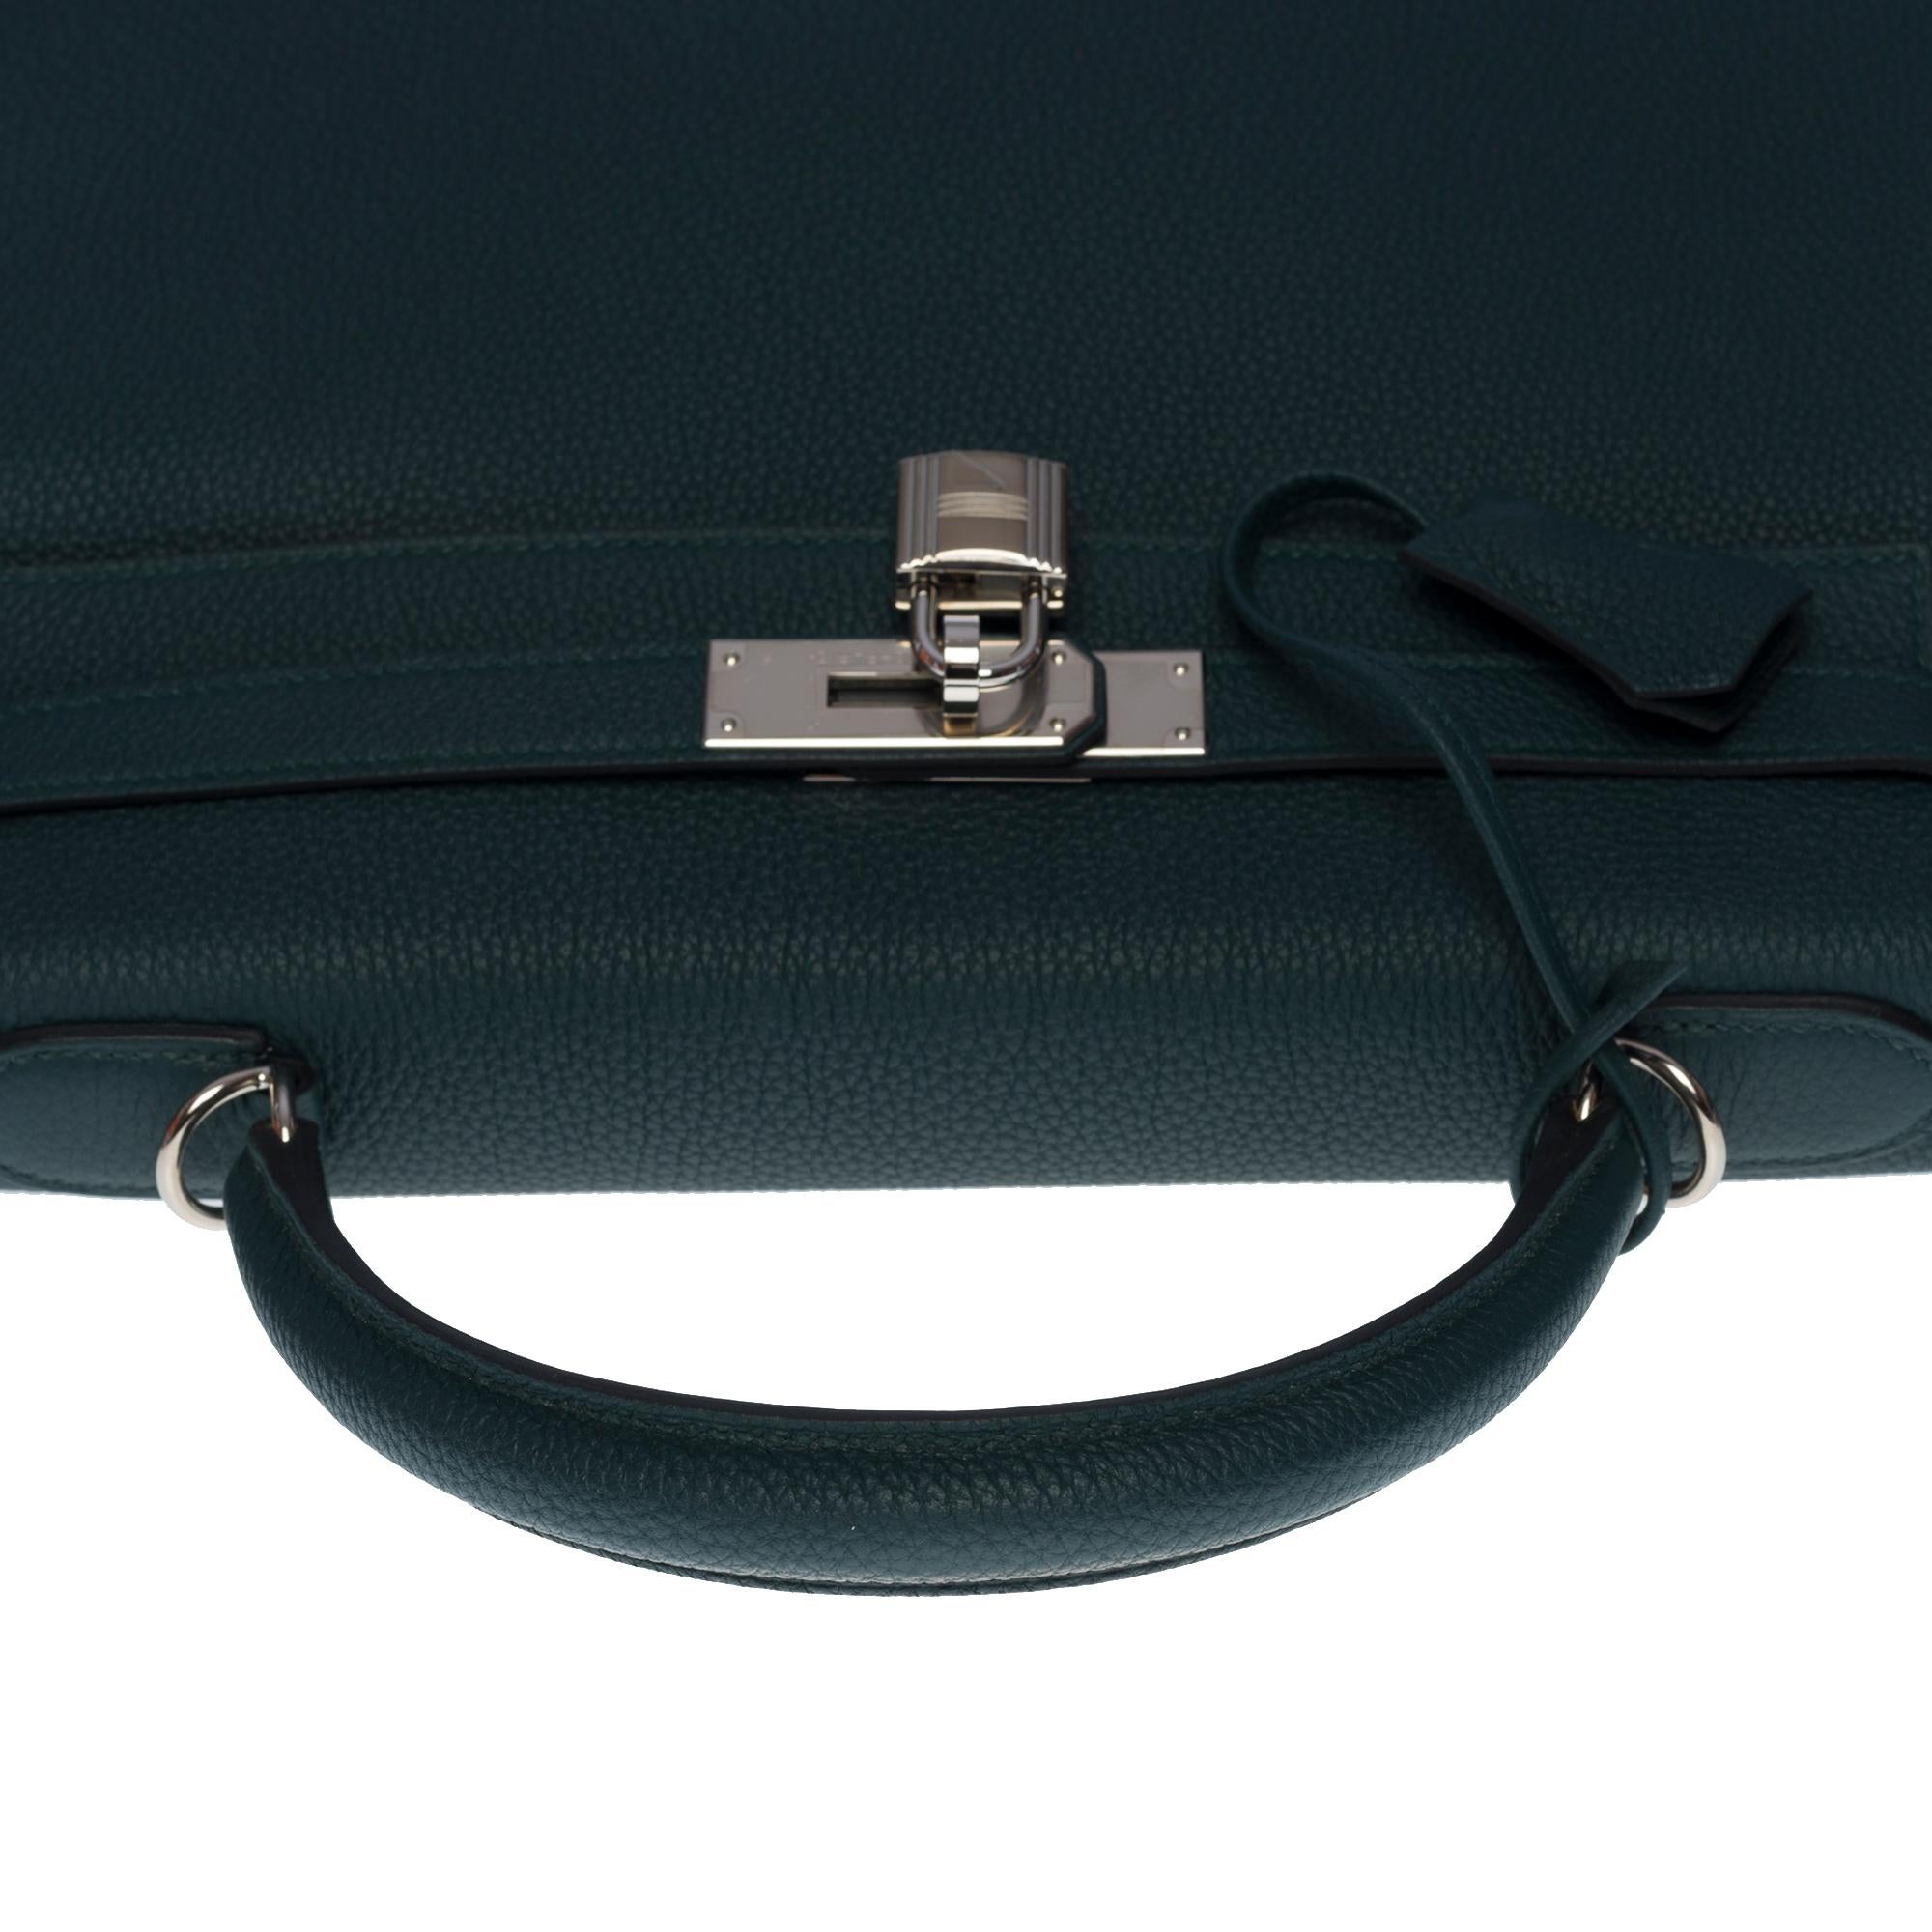 New Hermès Kelly 32 retourne handbag strap in Green Cypres Togo leather, SHW 5